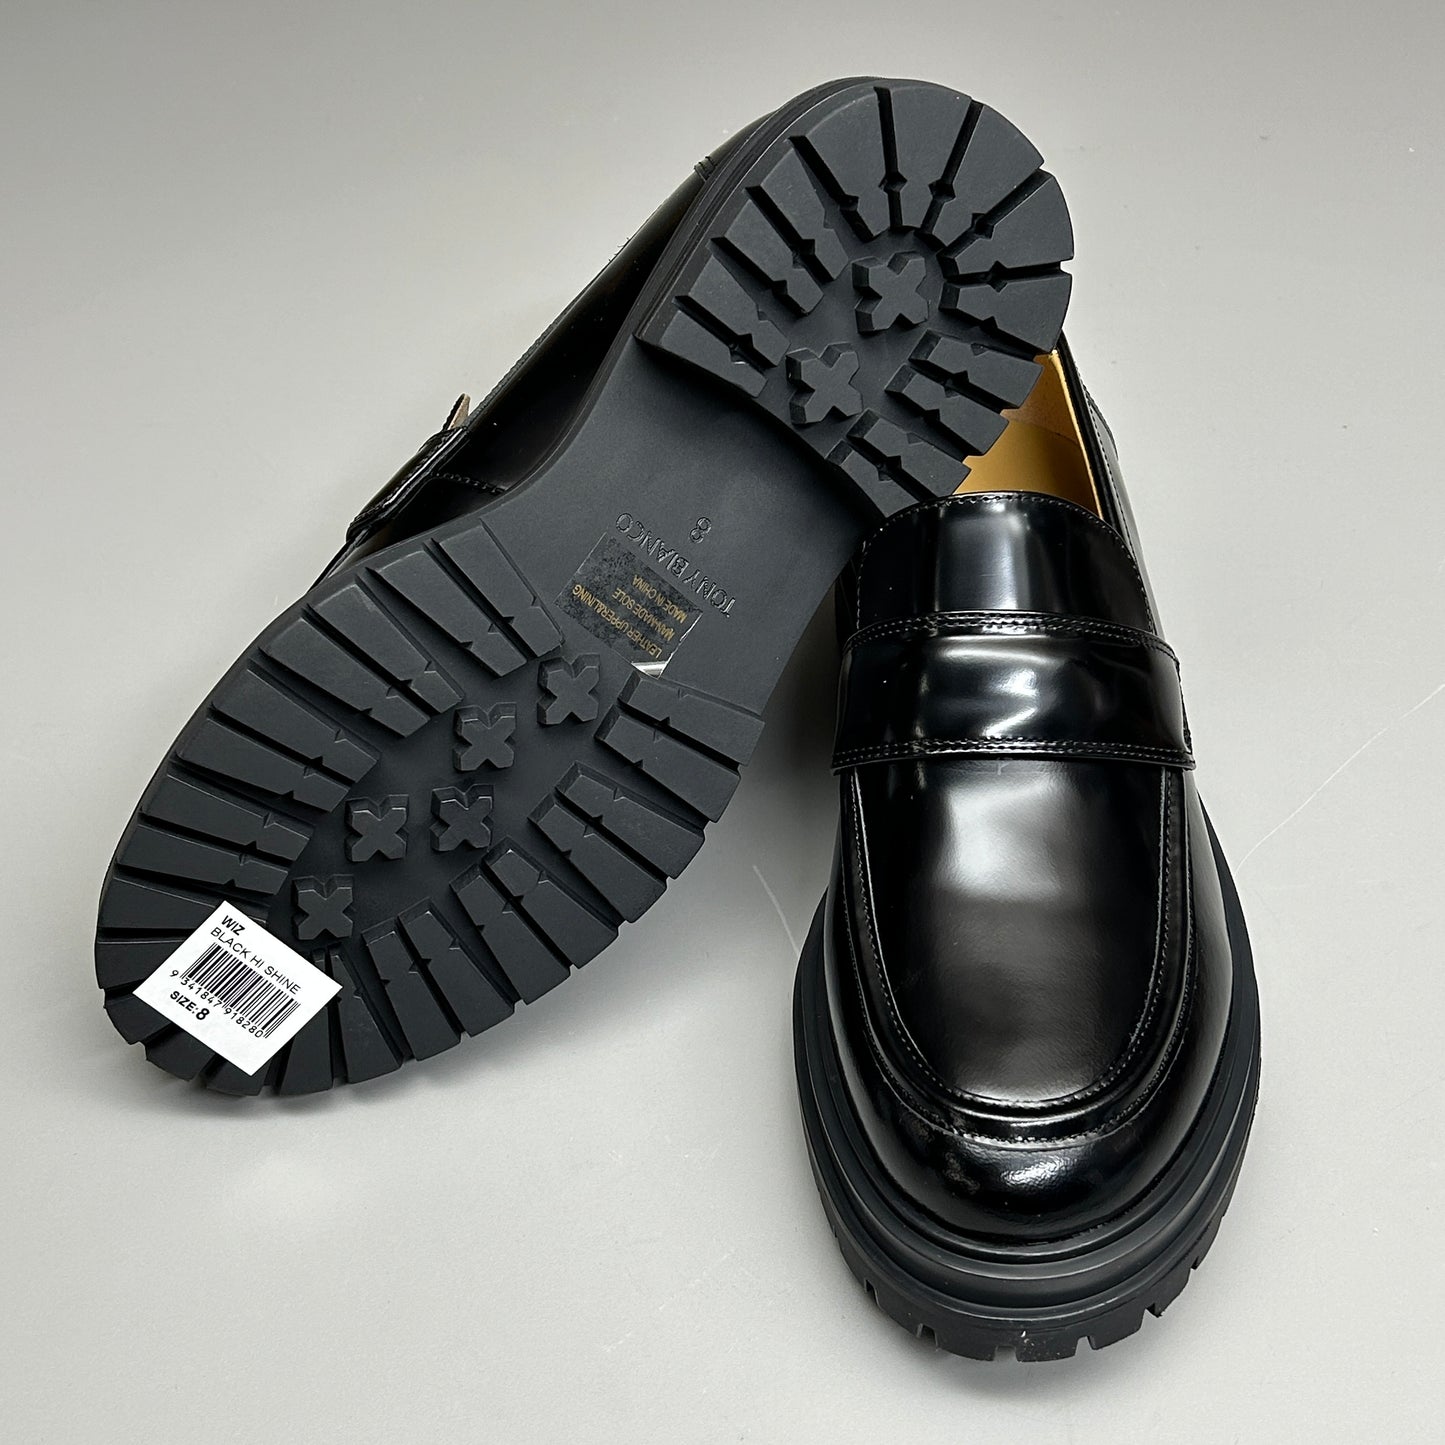 TONY BIANCO Wiz Black Hi Shine Casual Shoes Women's Sz 8 (New)